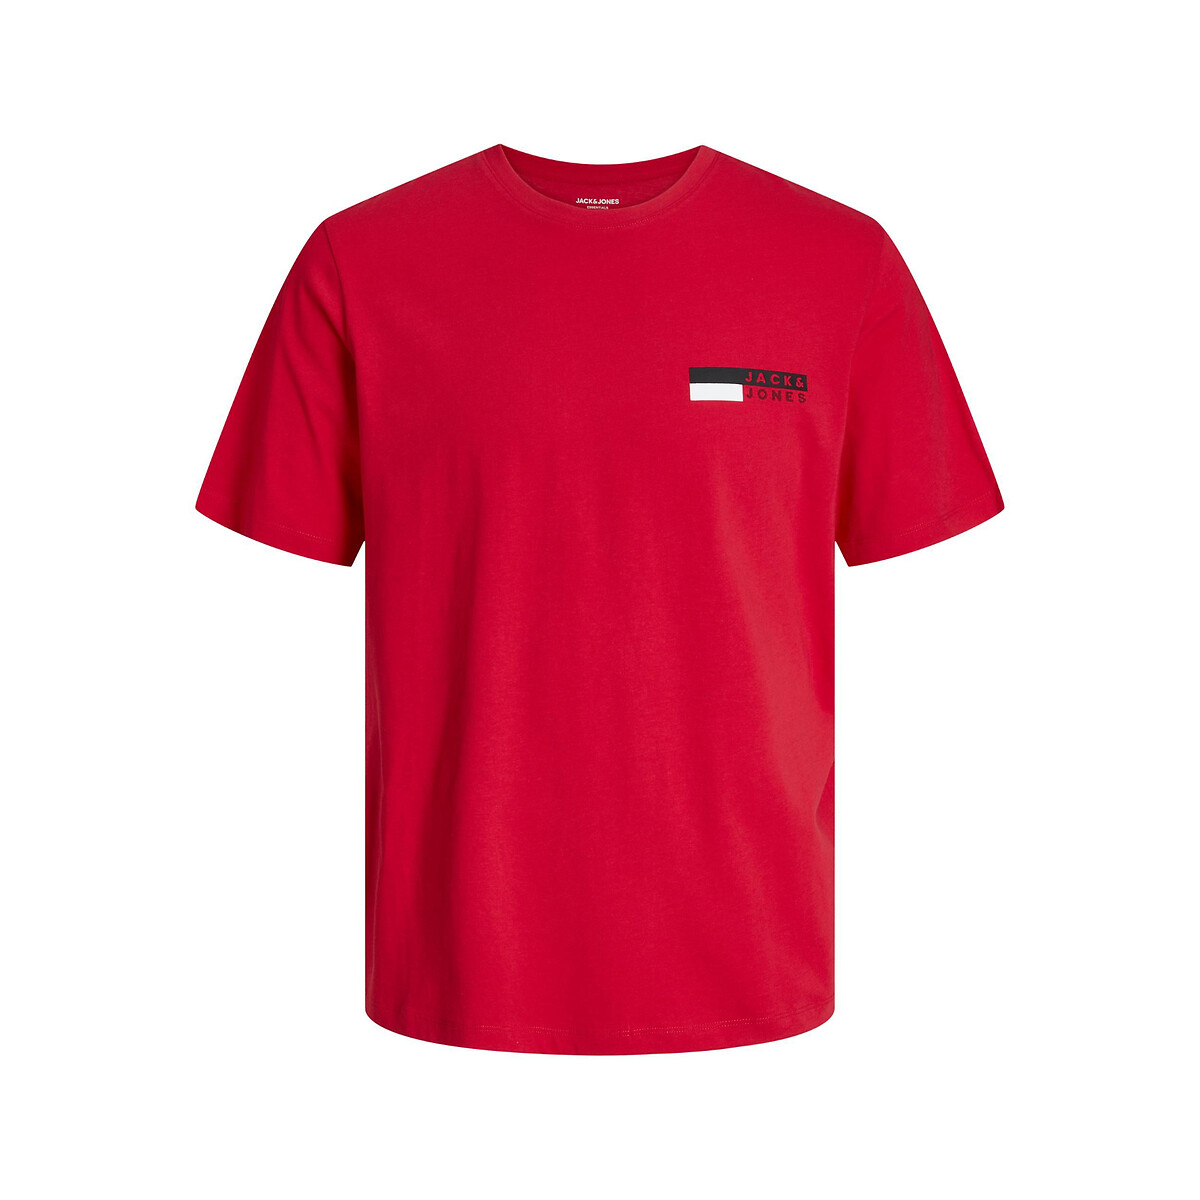 мужская футболка с коротким рукавом laredoute, красная